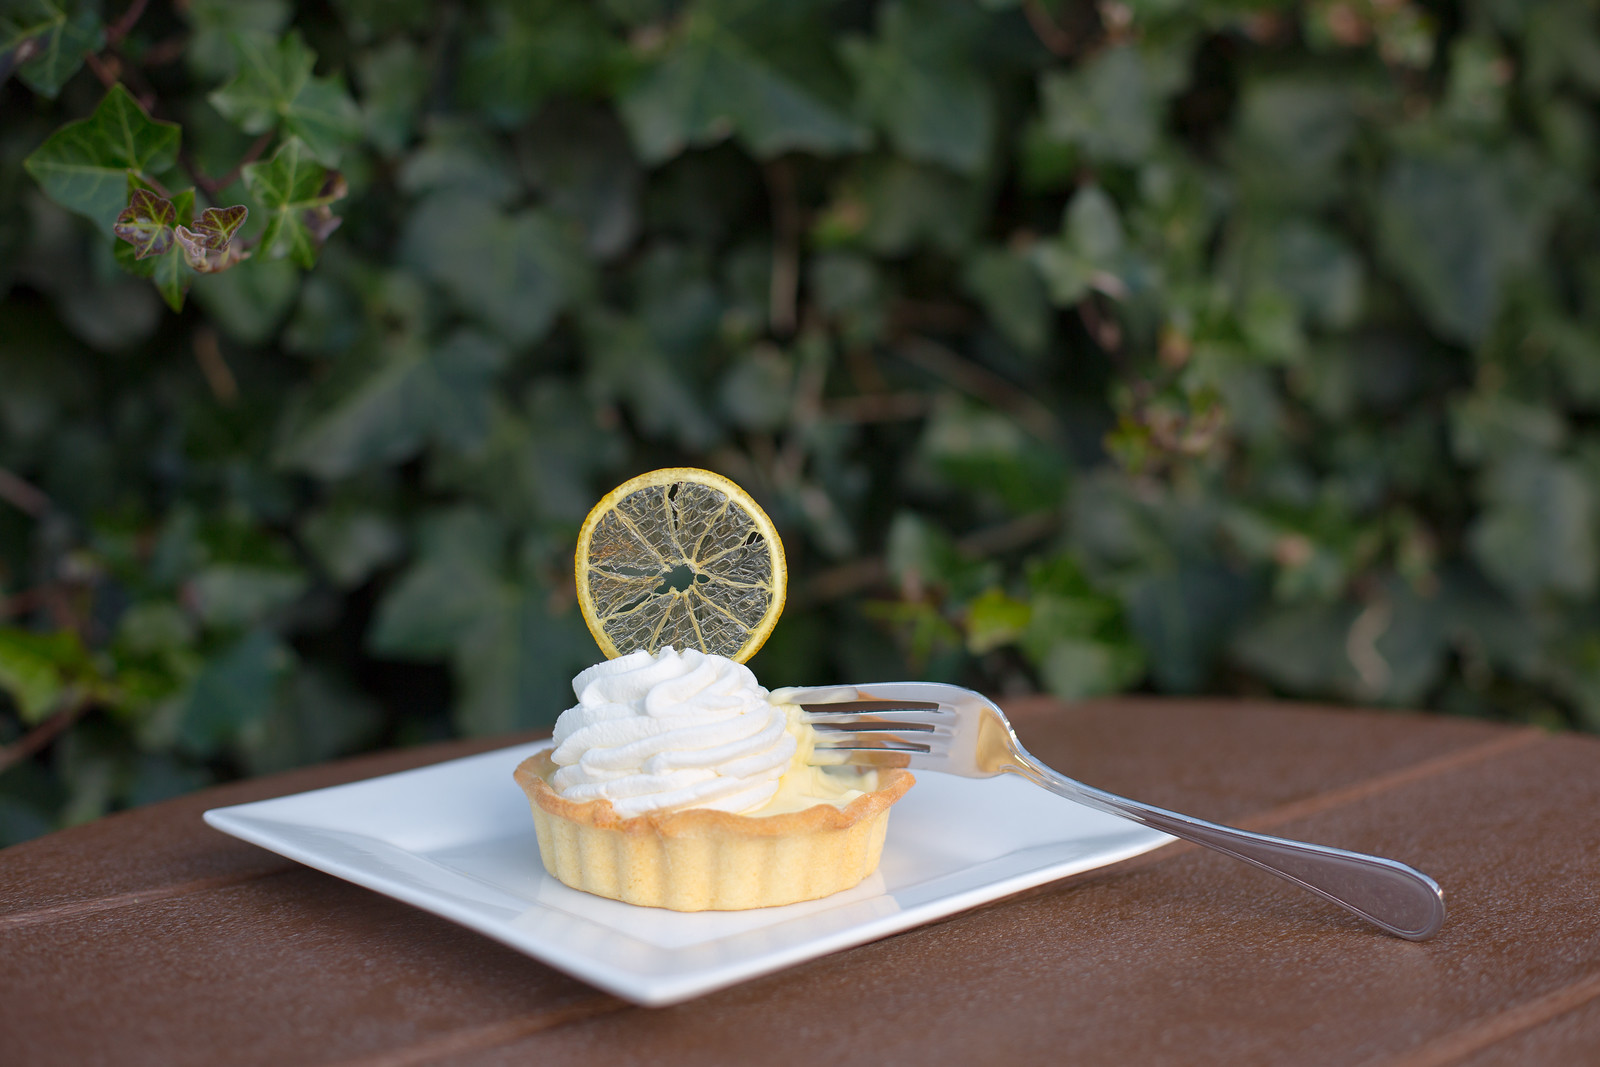 Lemon Tart at Trillium Cafe, Mendocino, photo by Cassandra Young